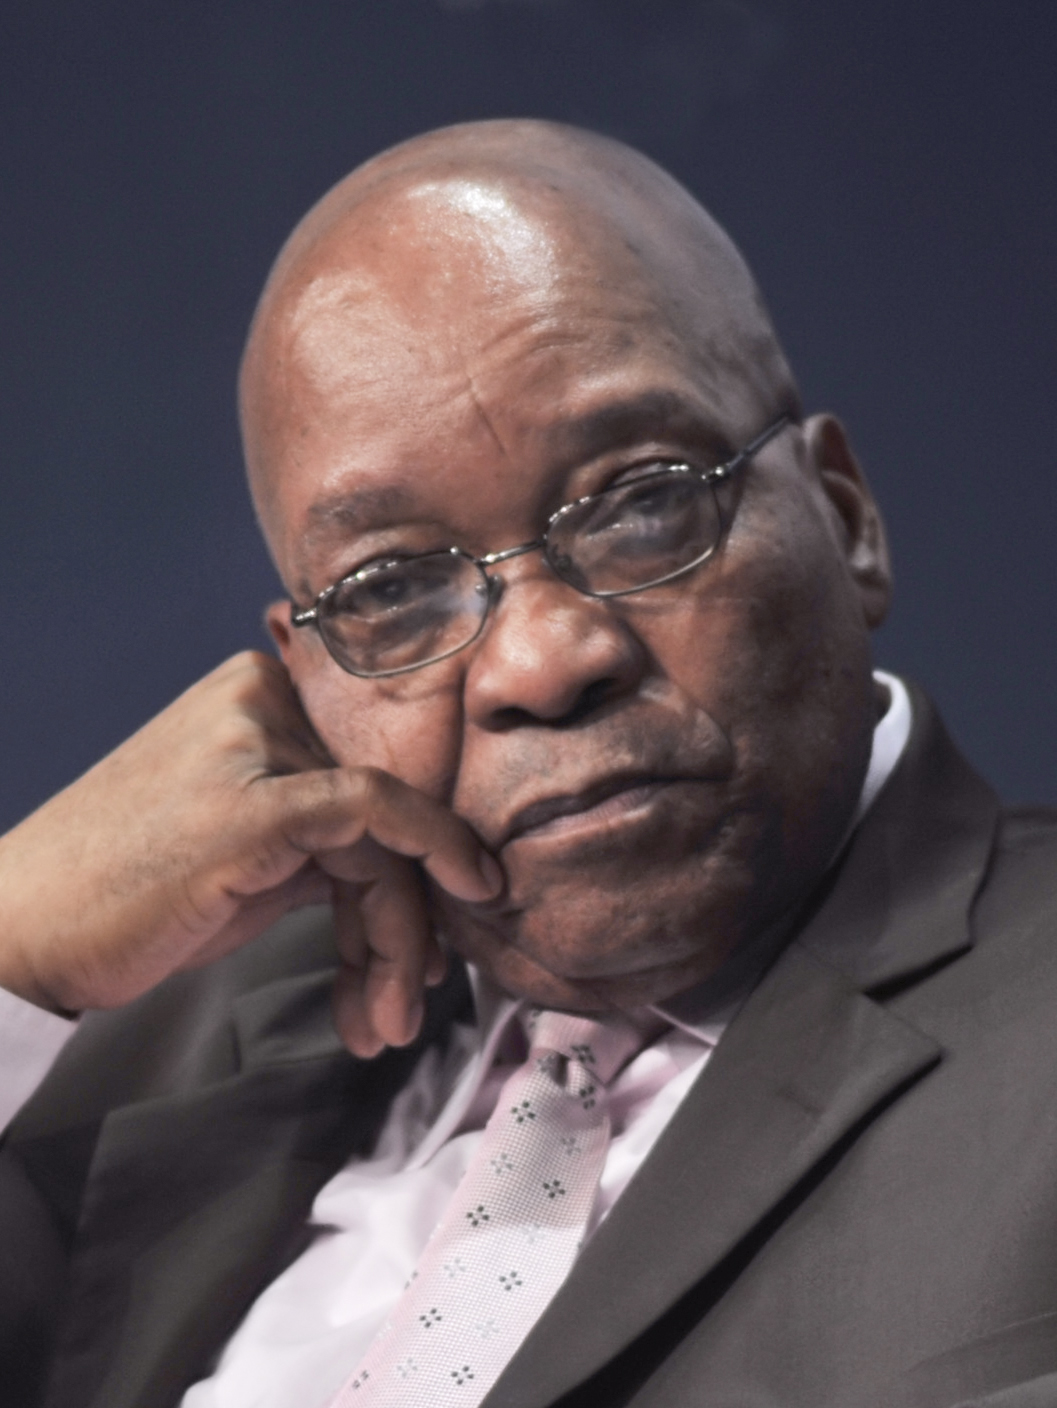 El expresidente sudafricano Zuma se niega a entregarse a las autoridades